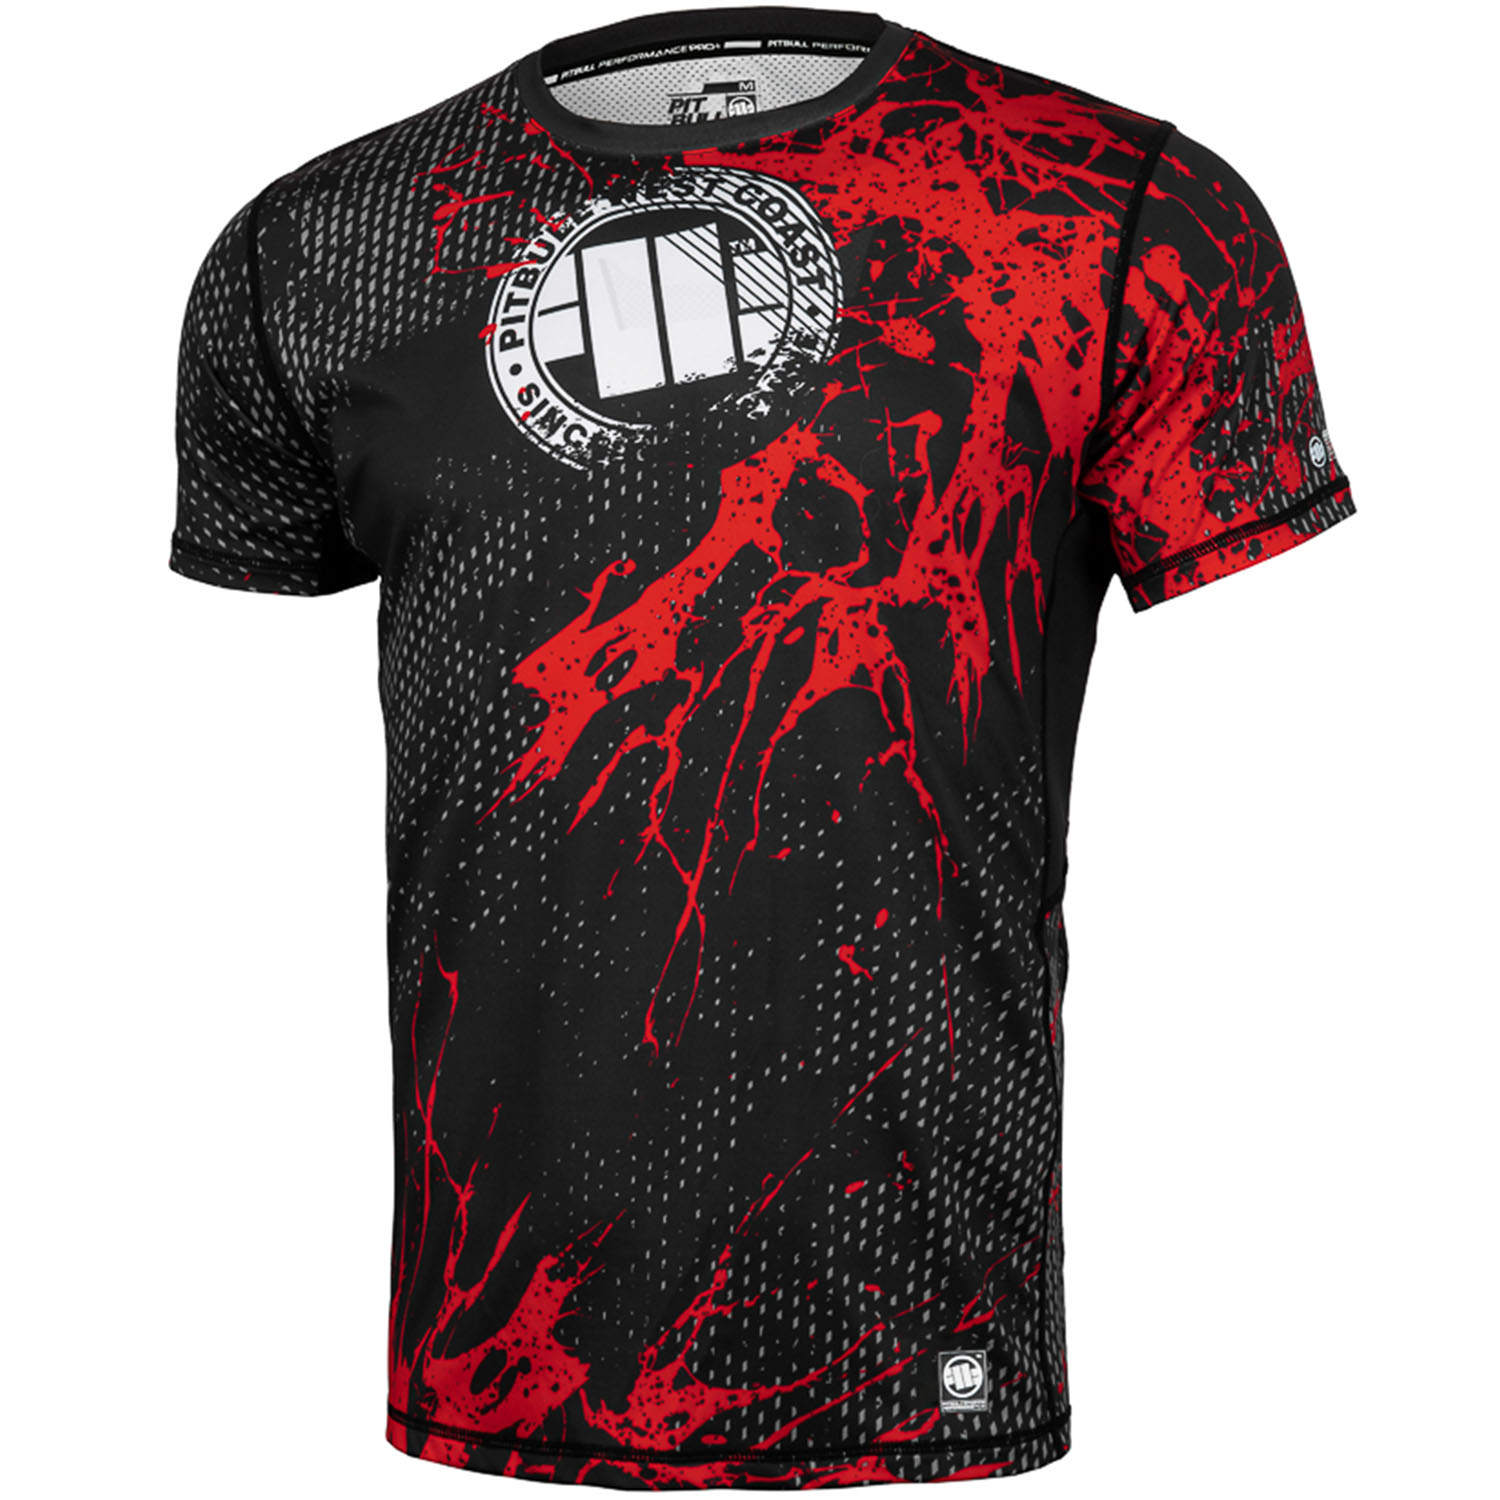 Pit Bull West Coast Performance T-Shirt, Mesh Blood Dog 2, black, XL